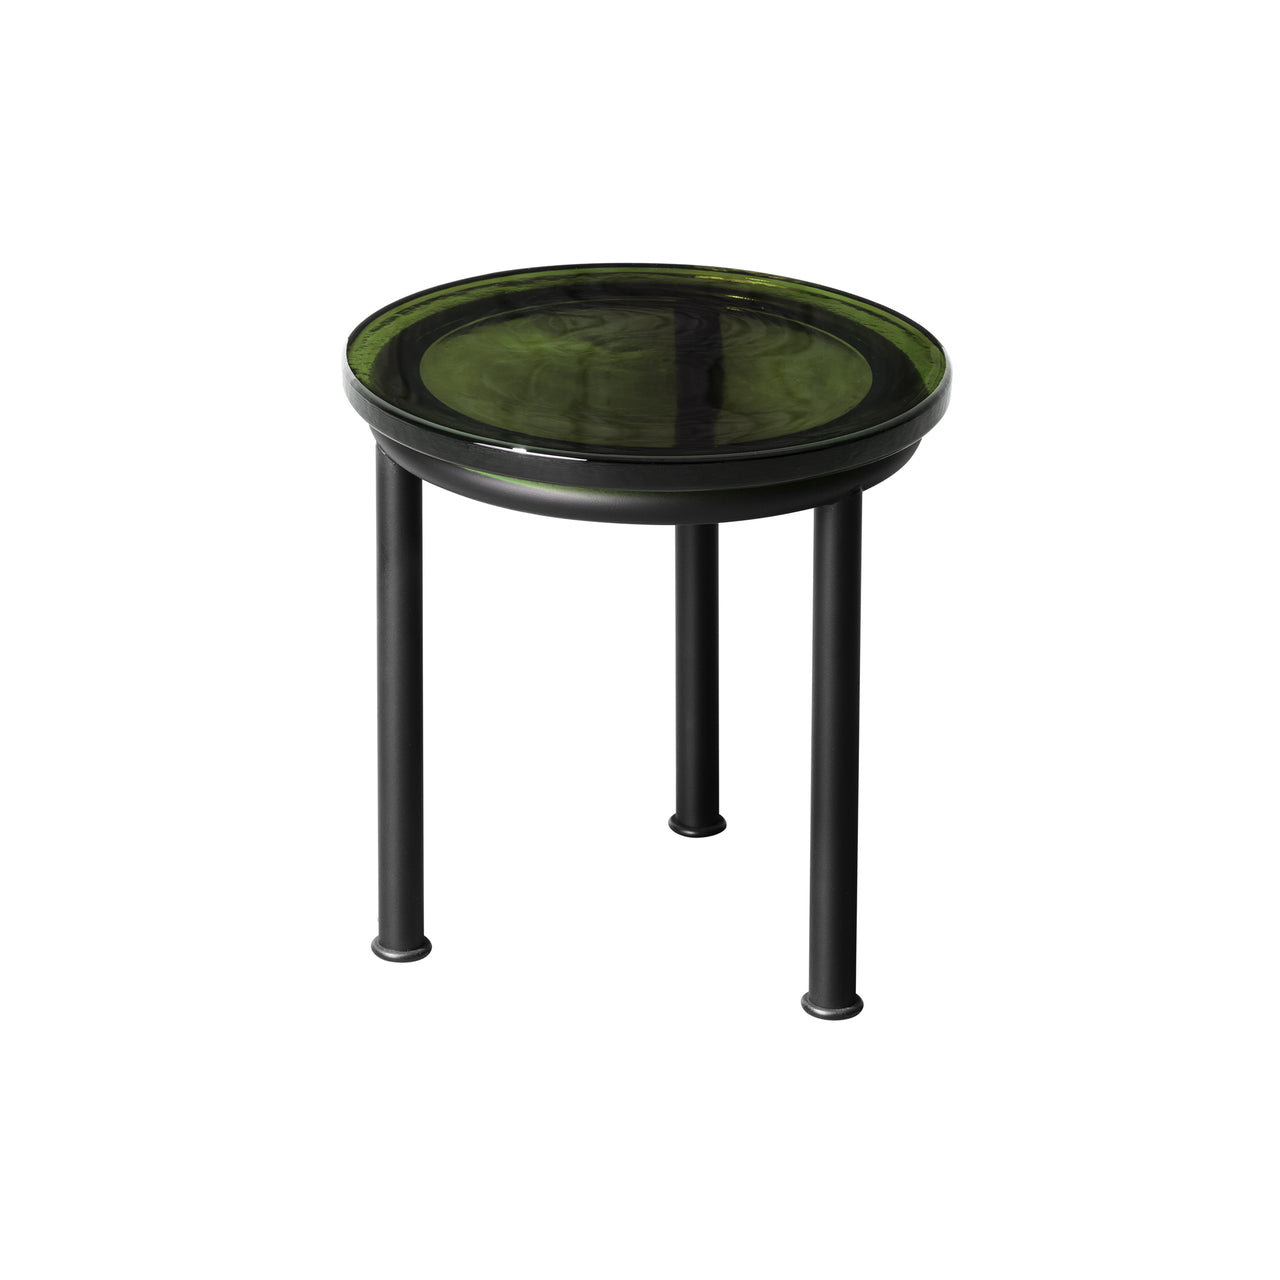 Zigo Side Table: Petrol Green + Black Metal